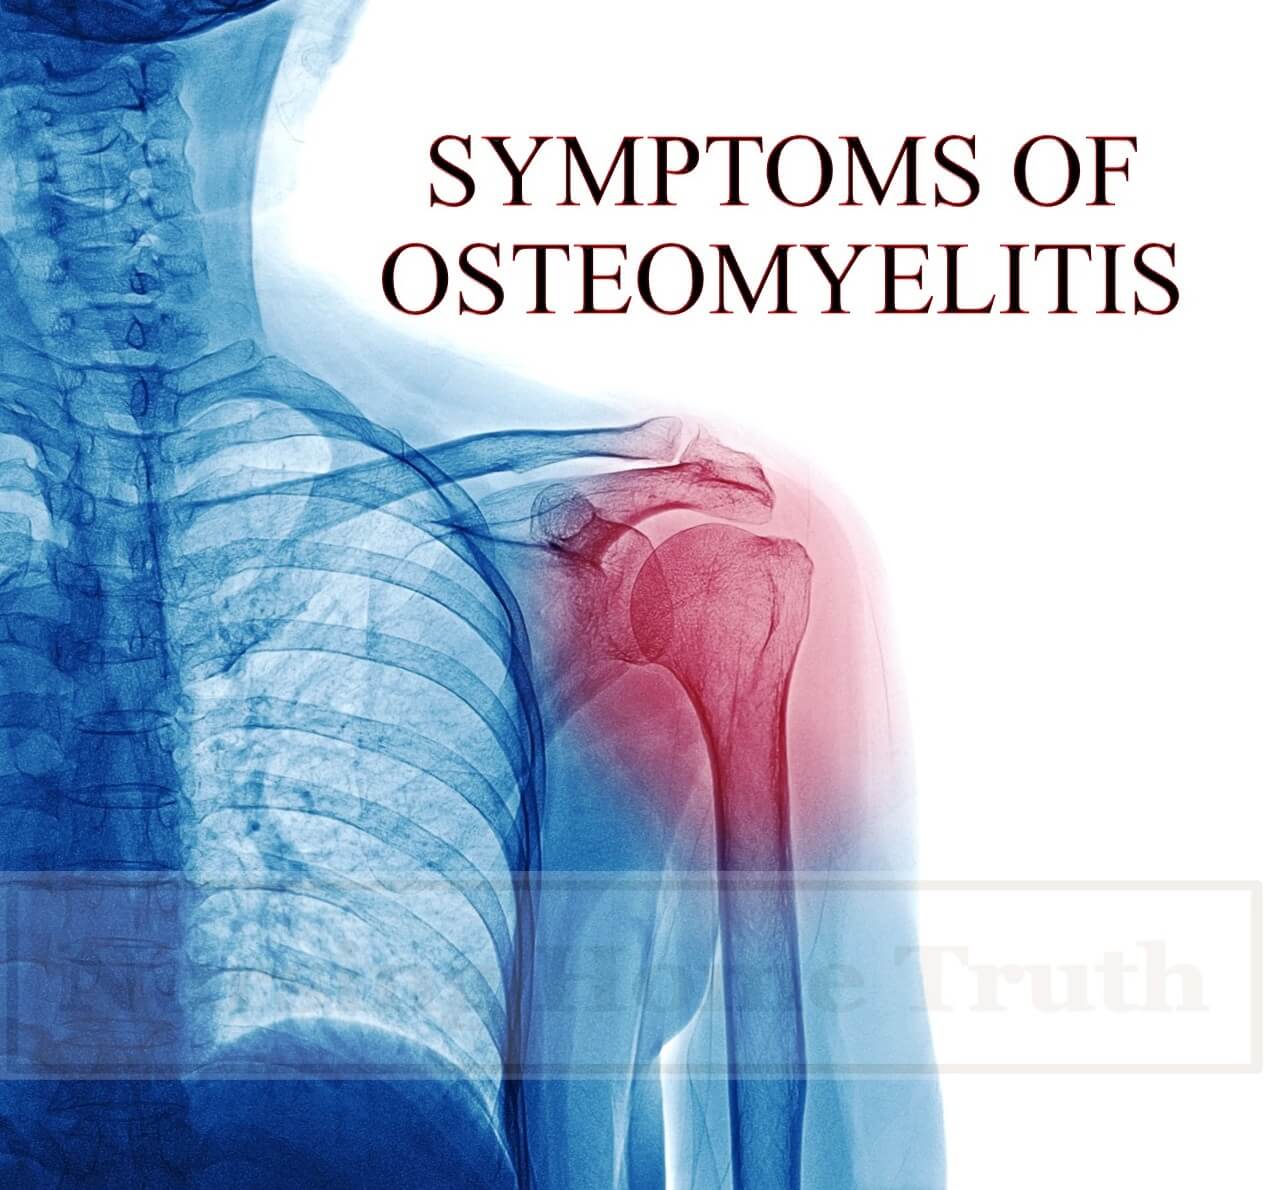 Symptoms of Osteomyelitis